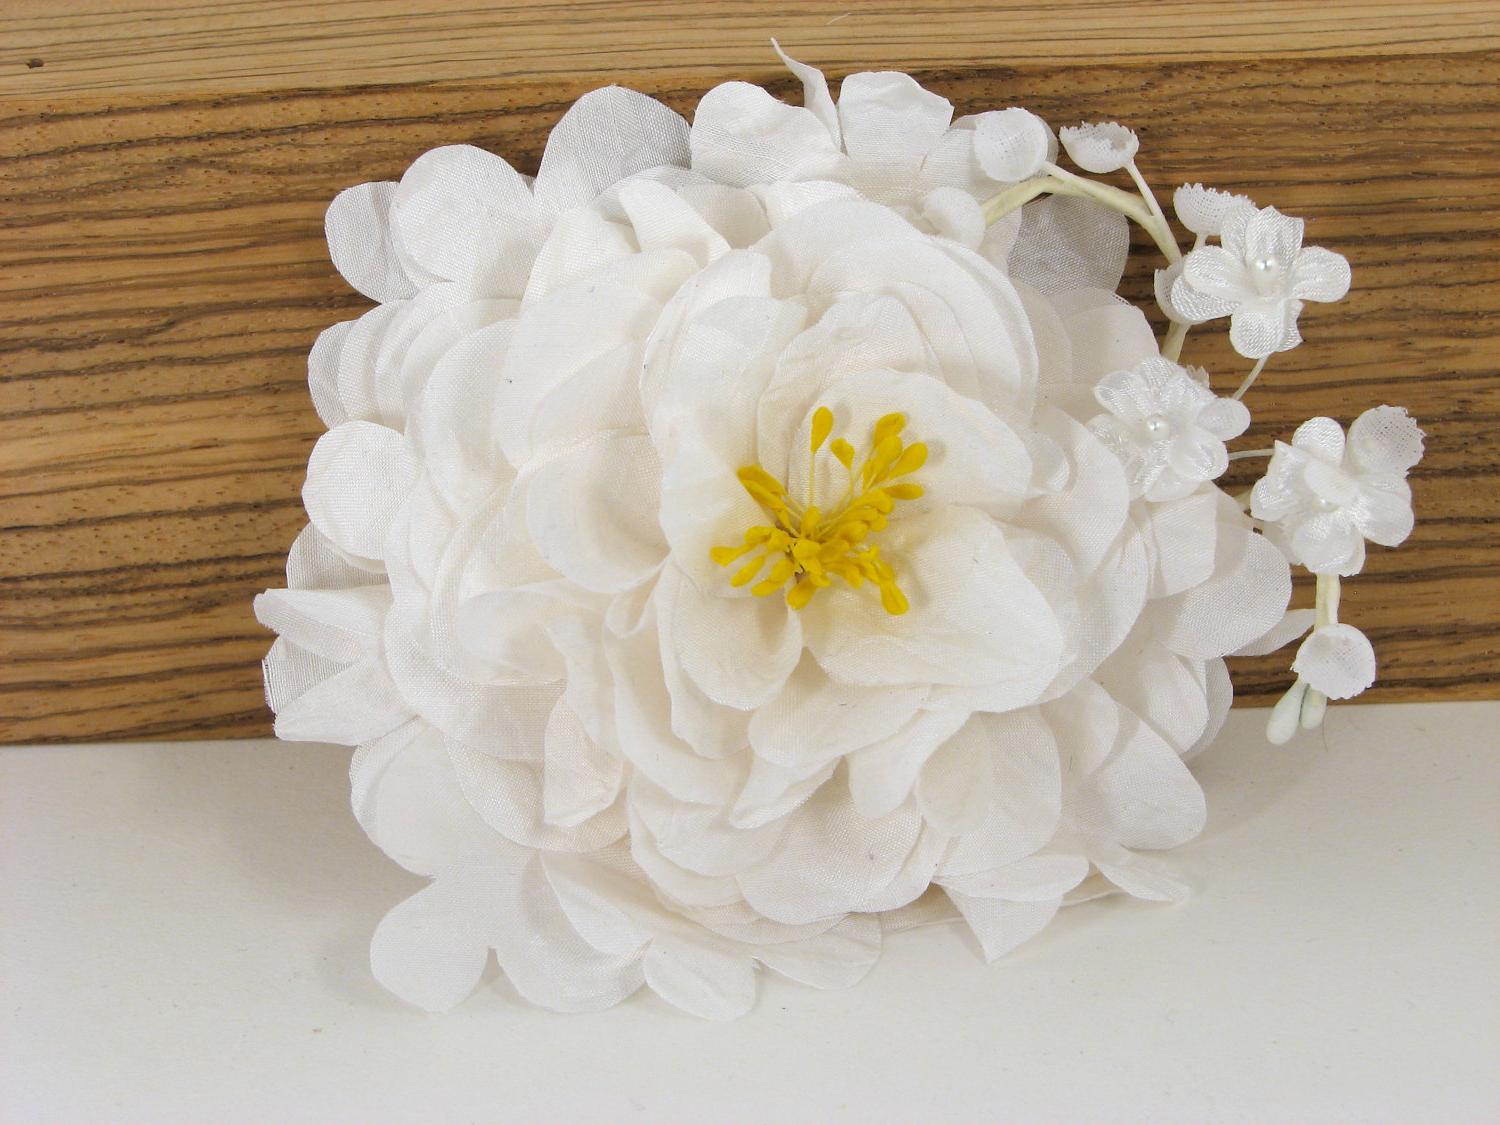 White Bridal Hair Flower - Garden Rose - No. 17. From lushsugar